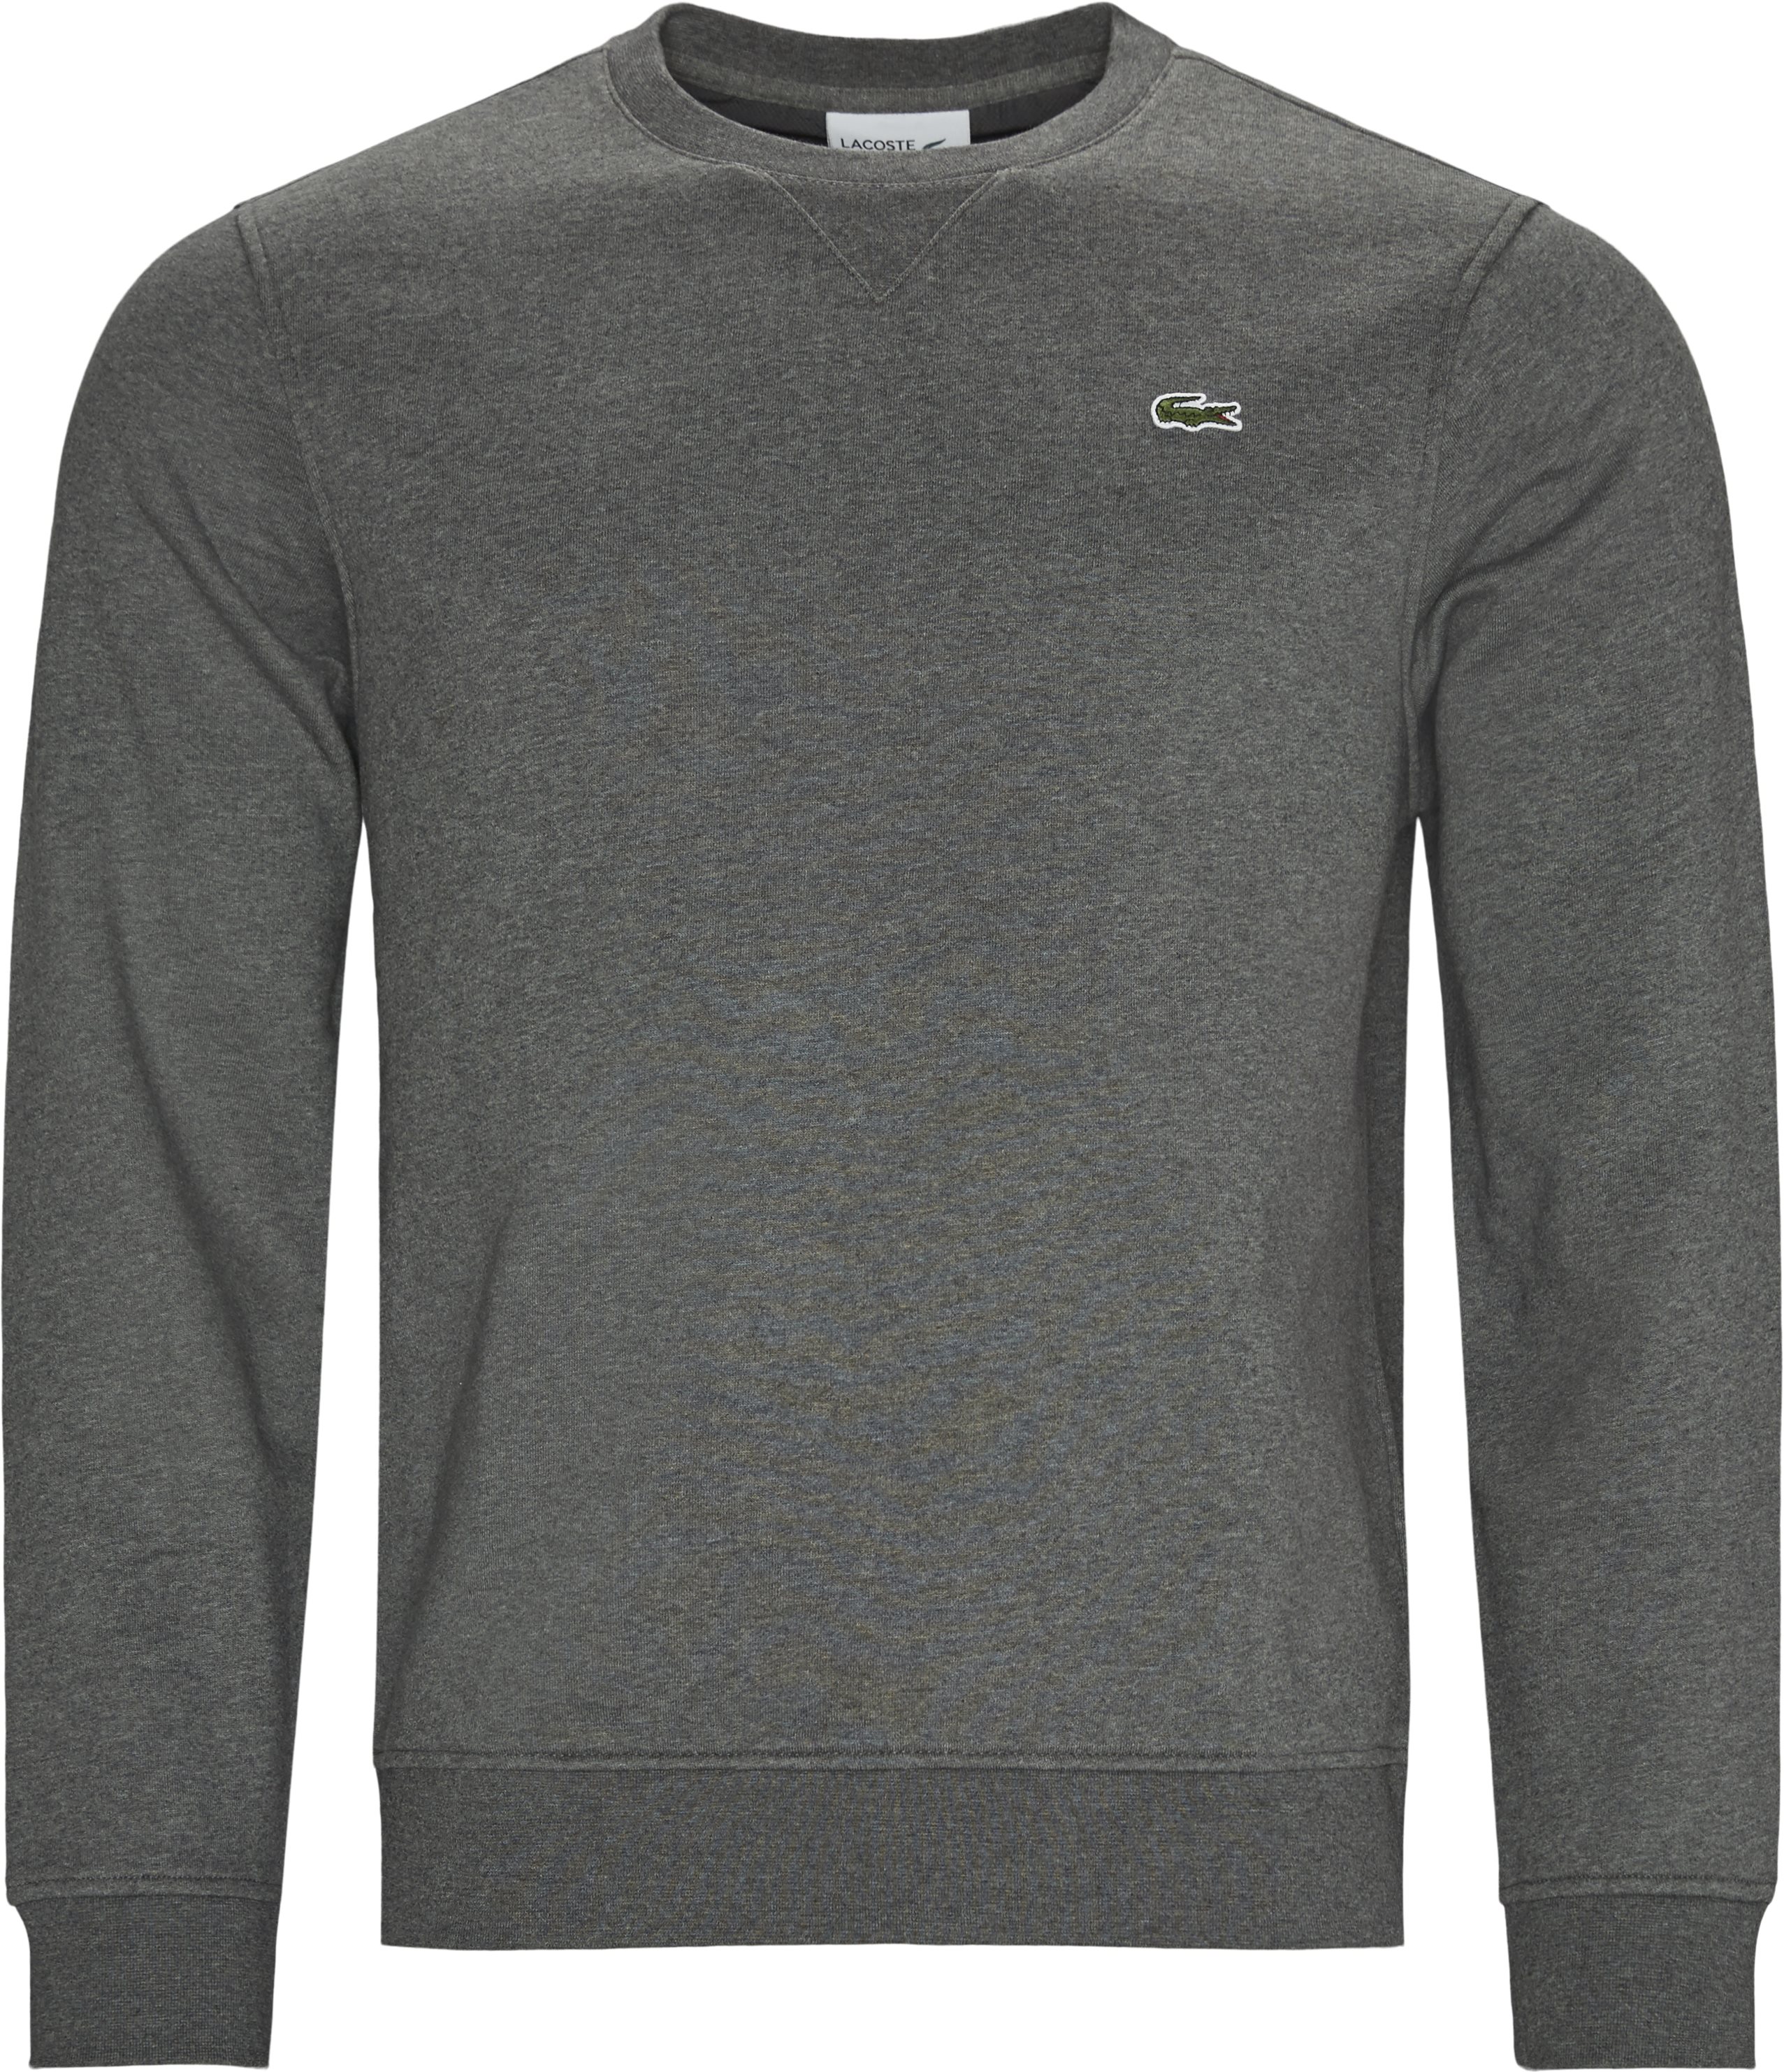 Lacoste Sweatshirts SH1505 Grey